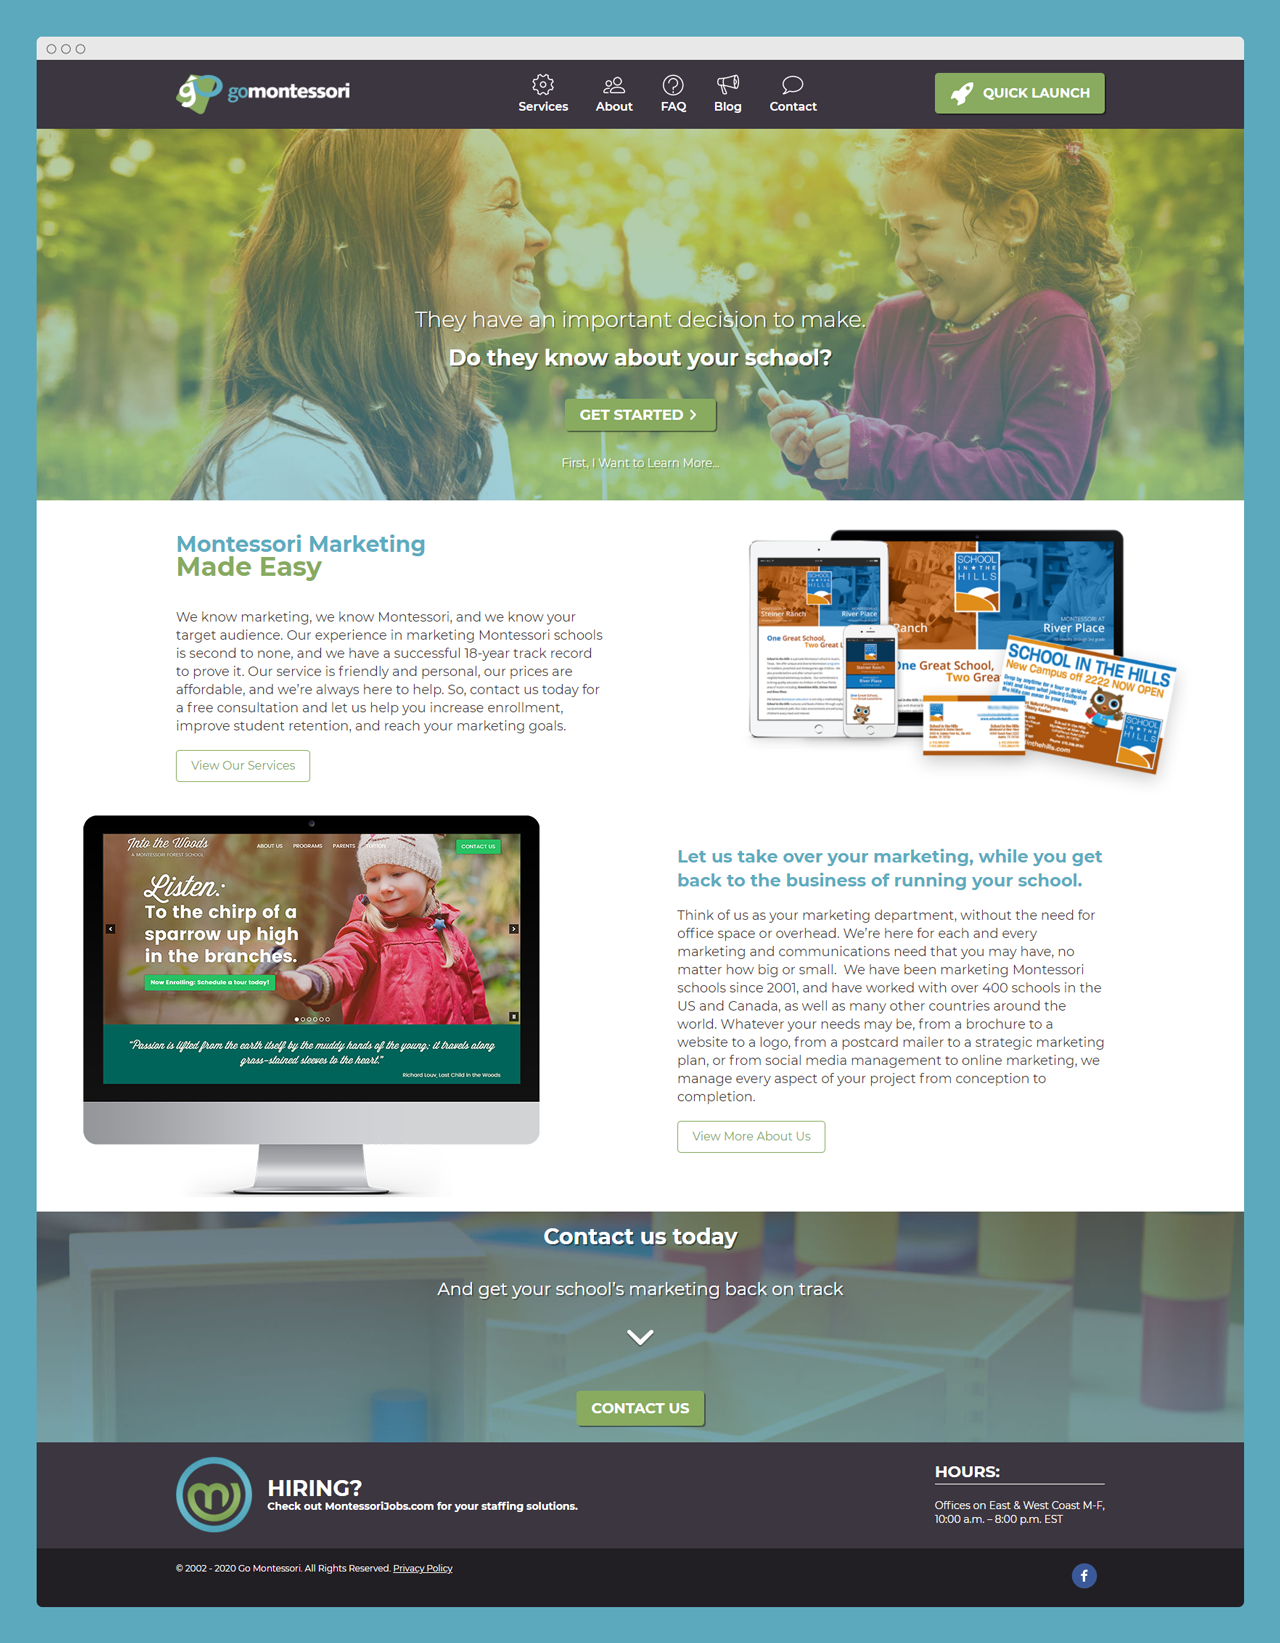 Go Montessori website design